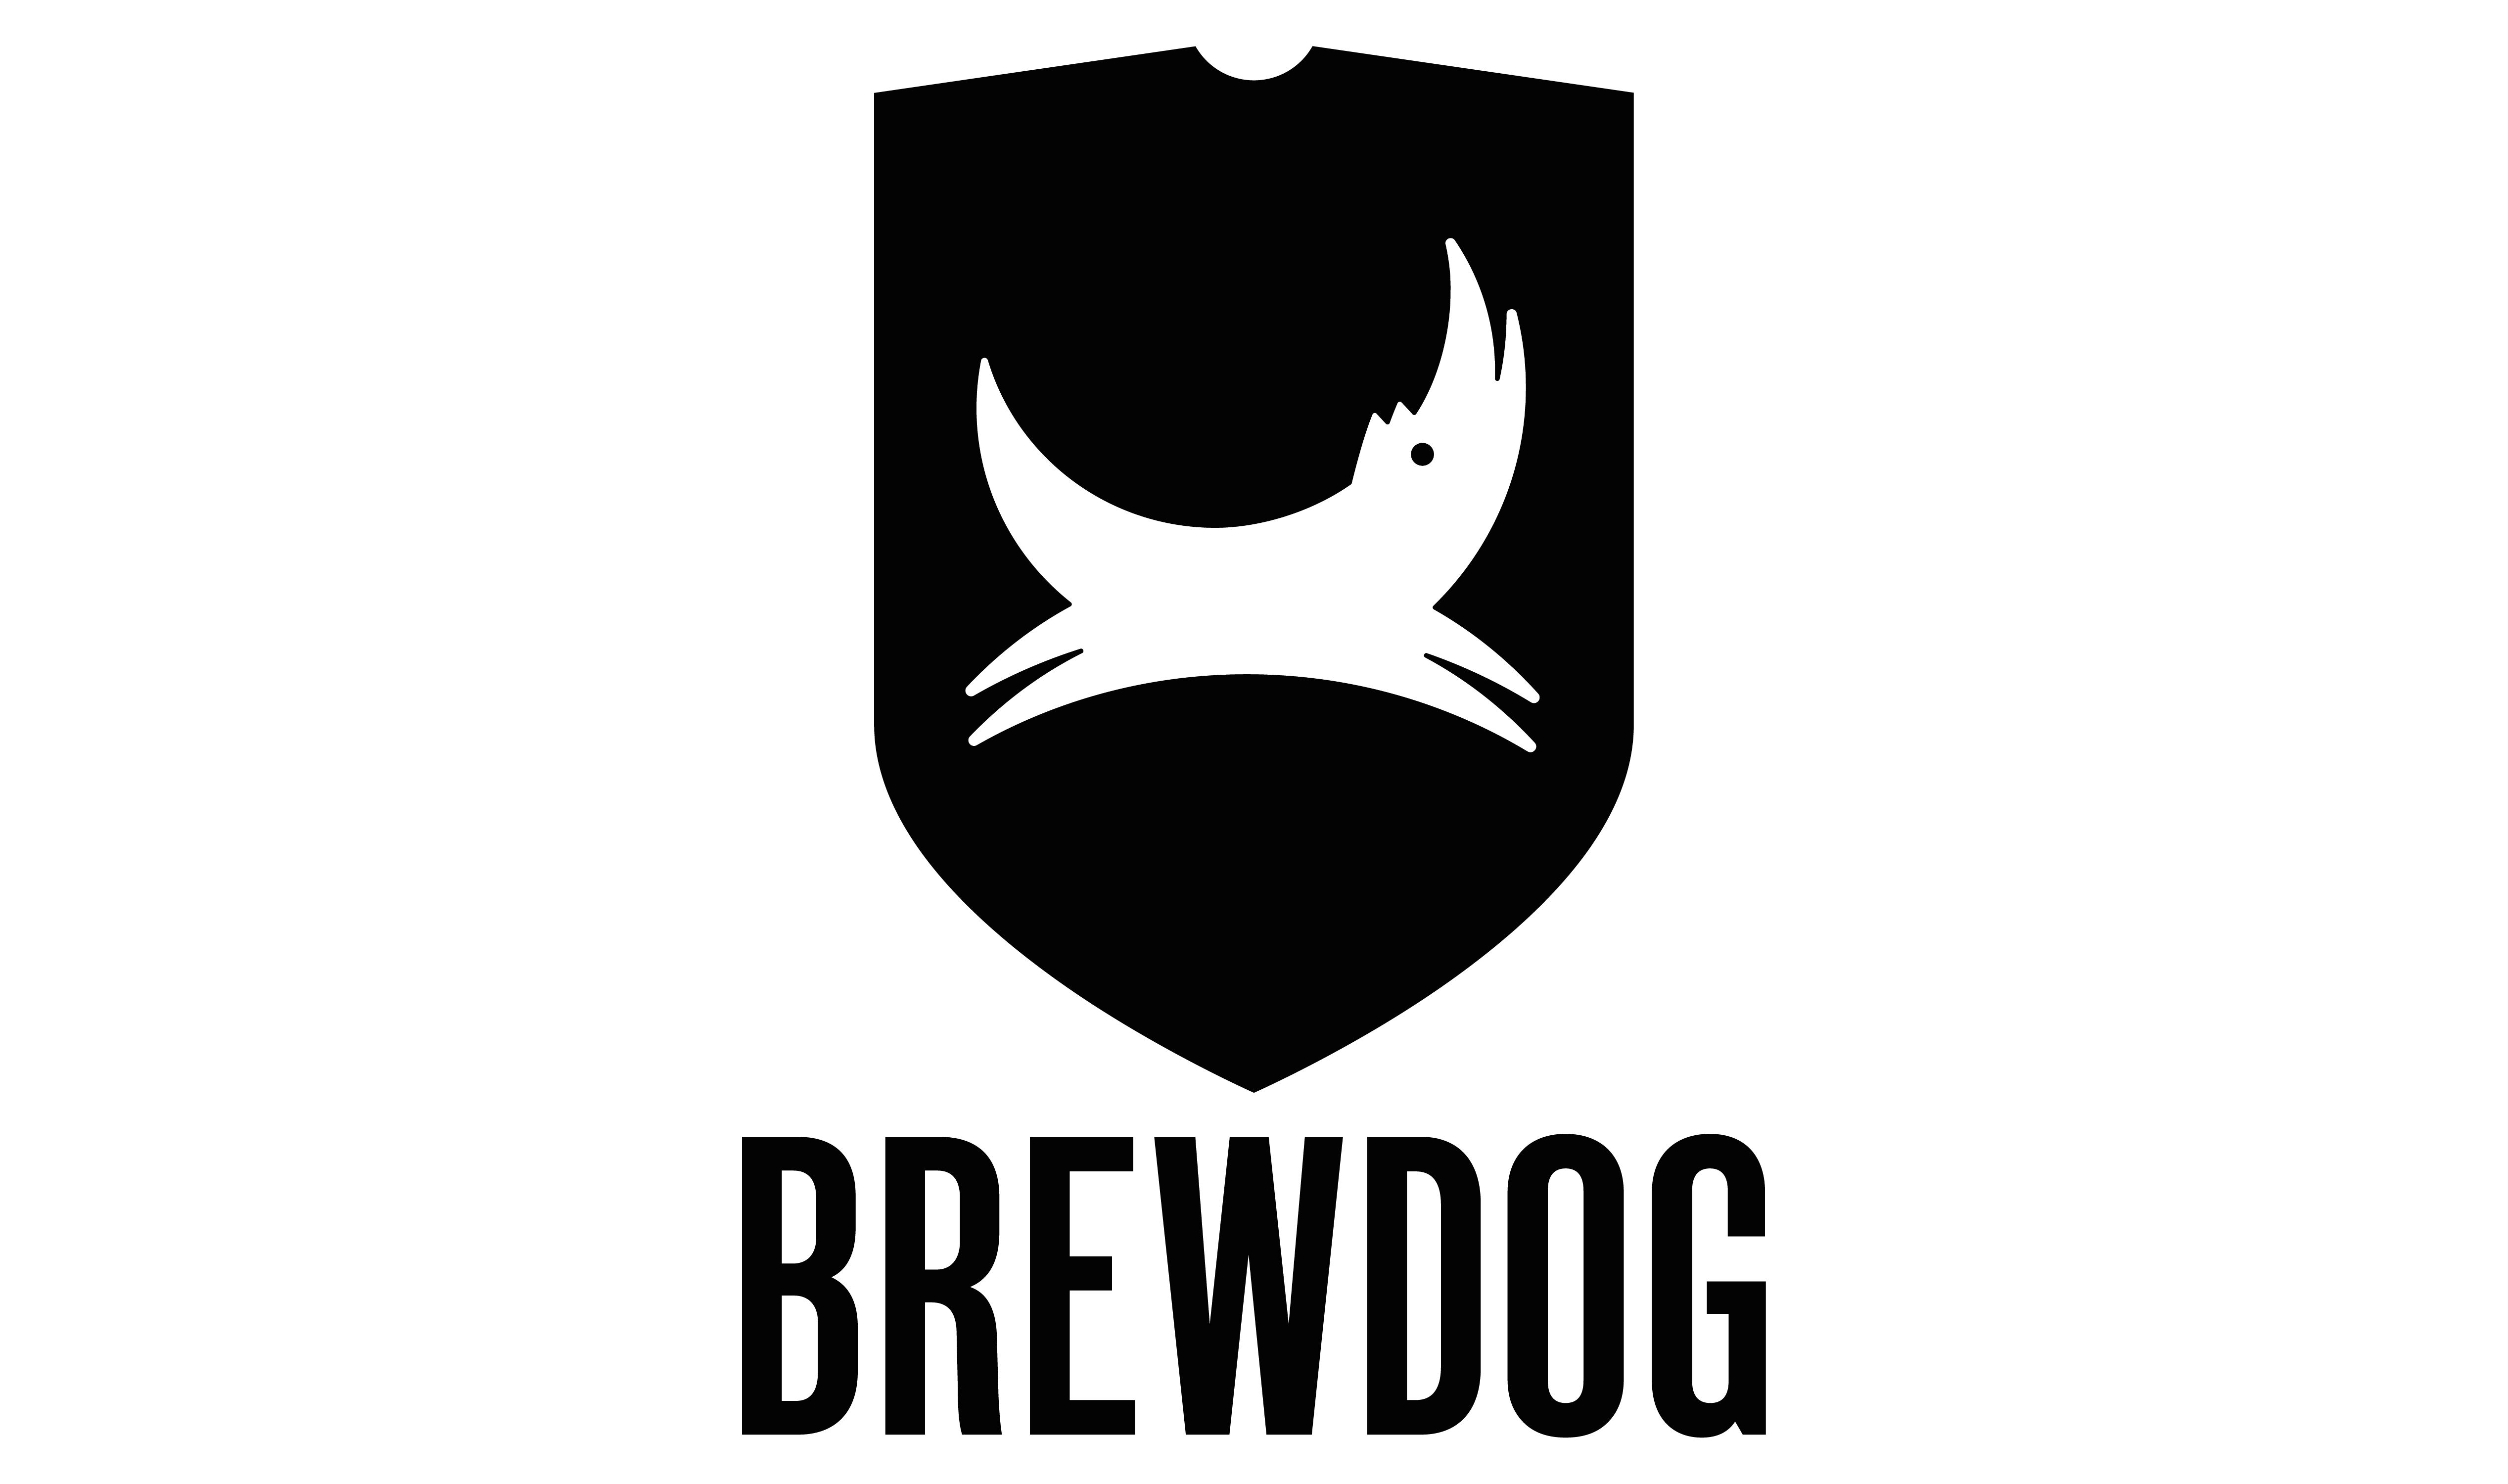 BrewDog plc